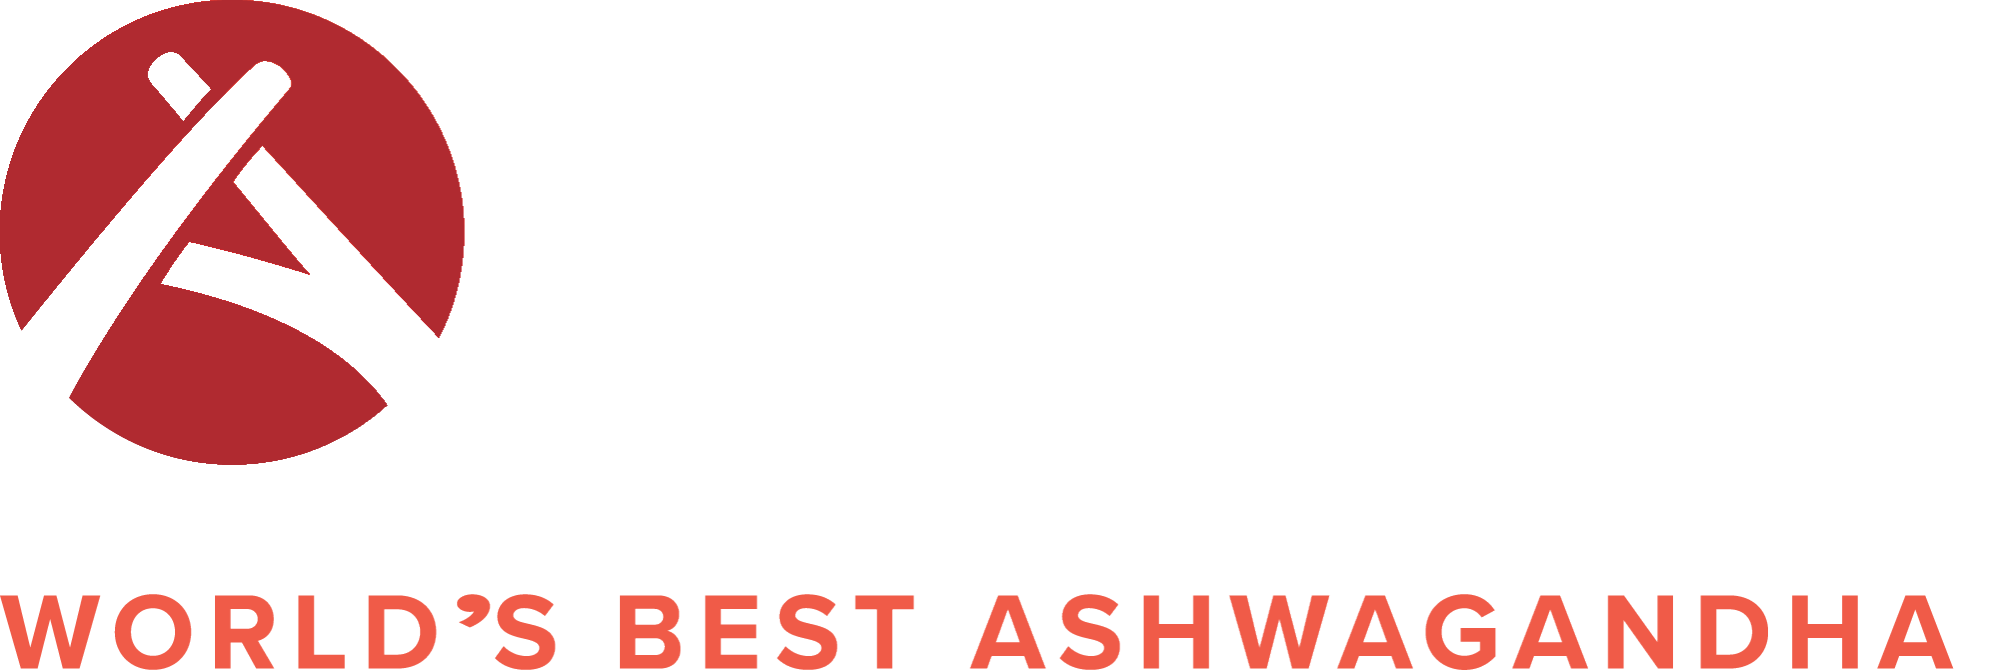 KSM-66 logo